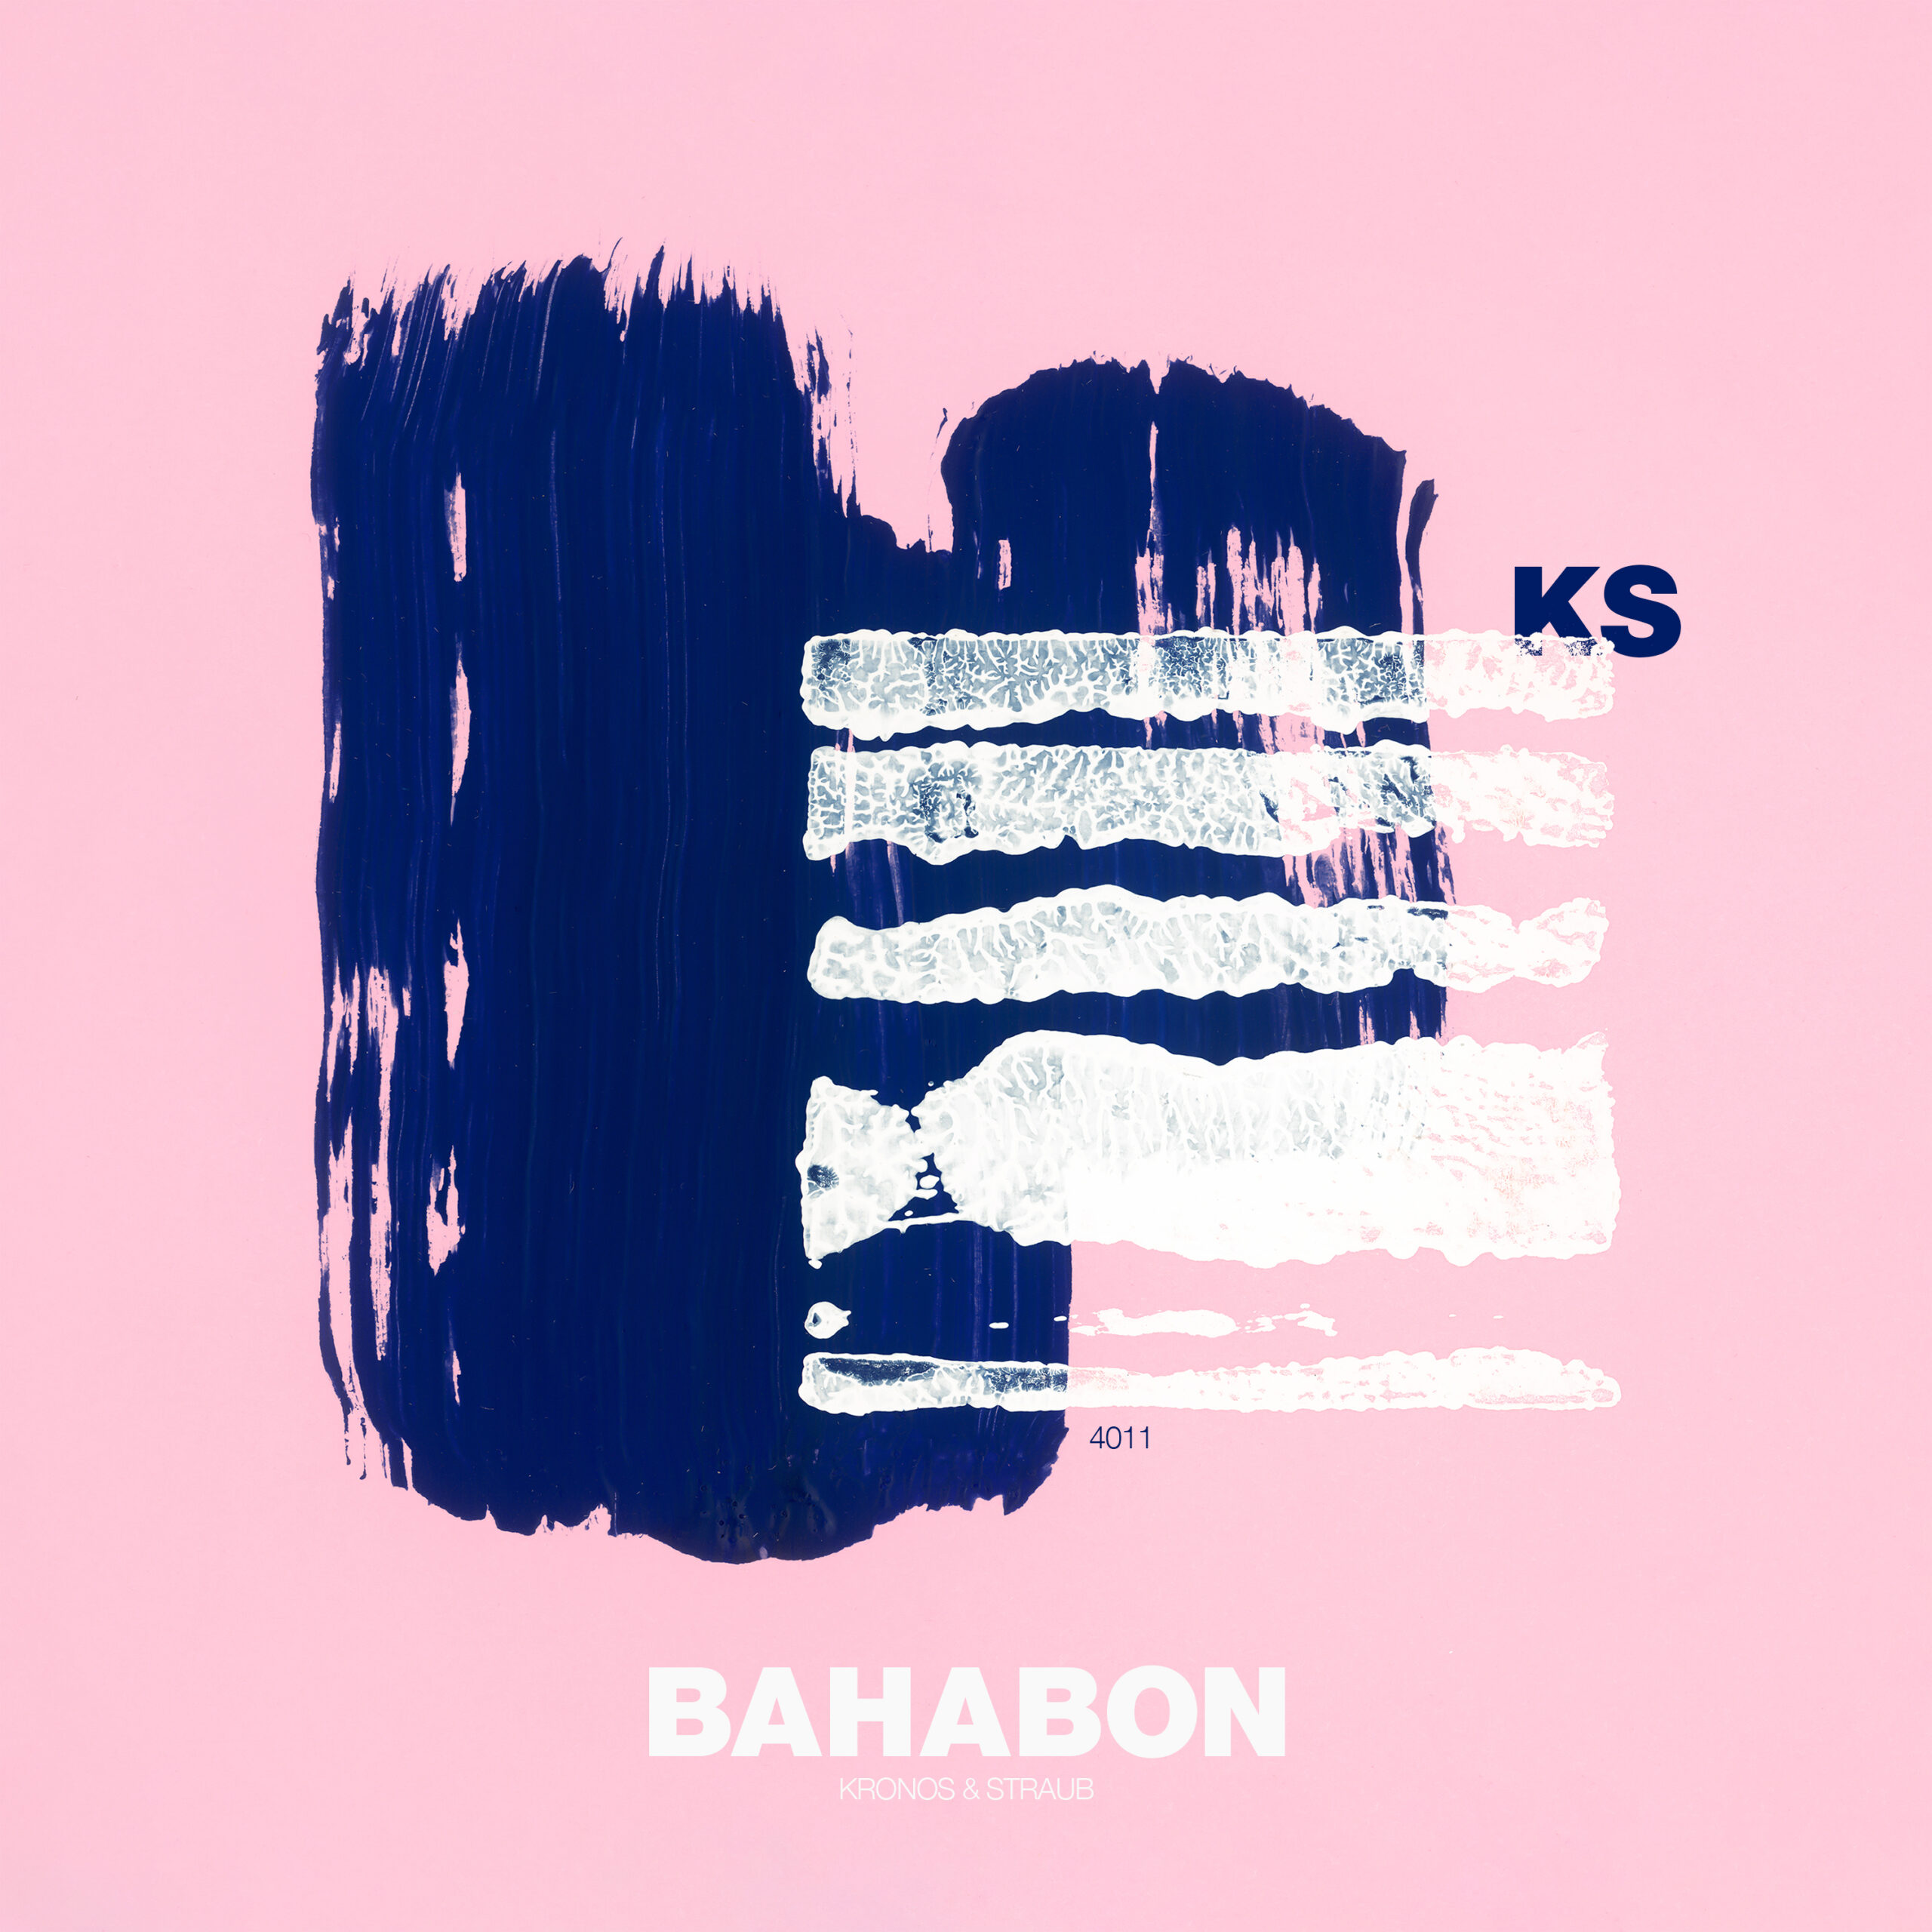 Bahabon-01